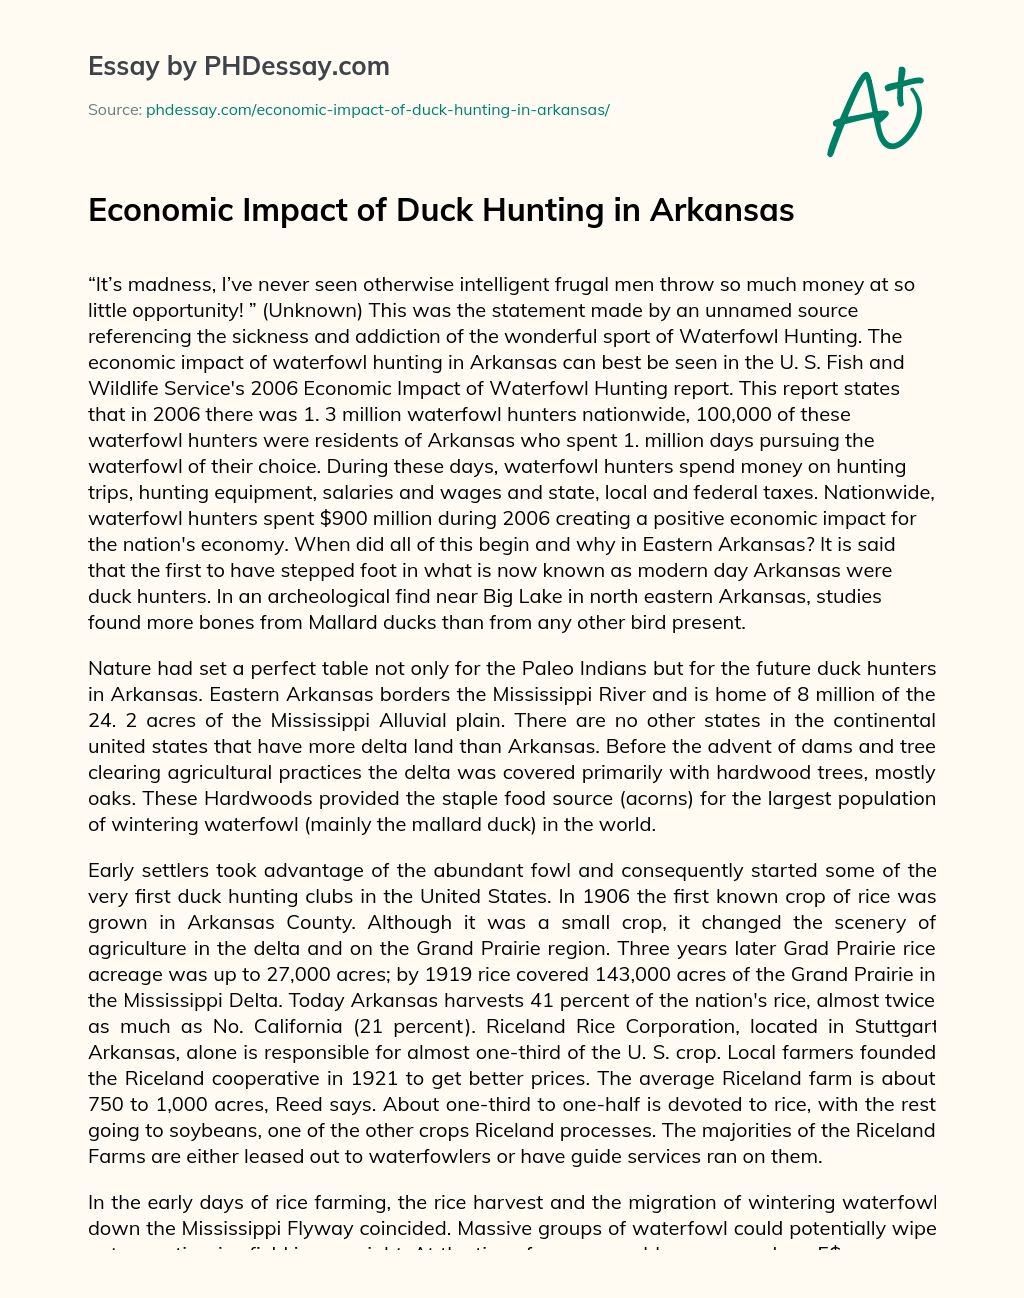 Economic Impact of Duck Hunting in Arkansas essay